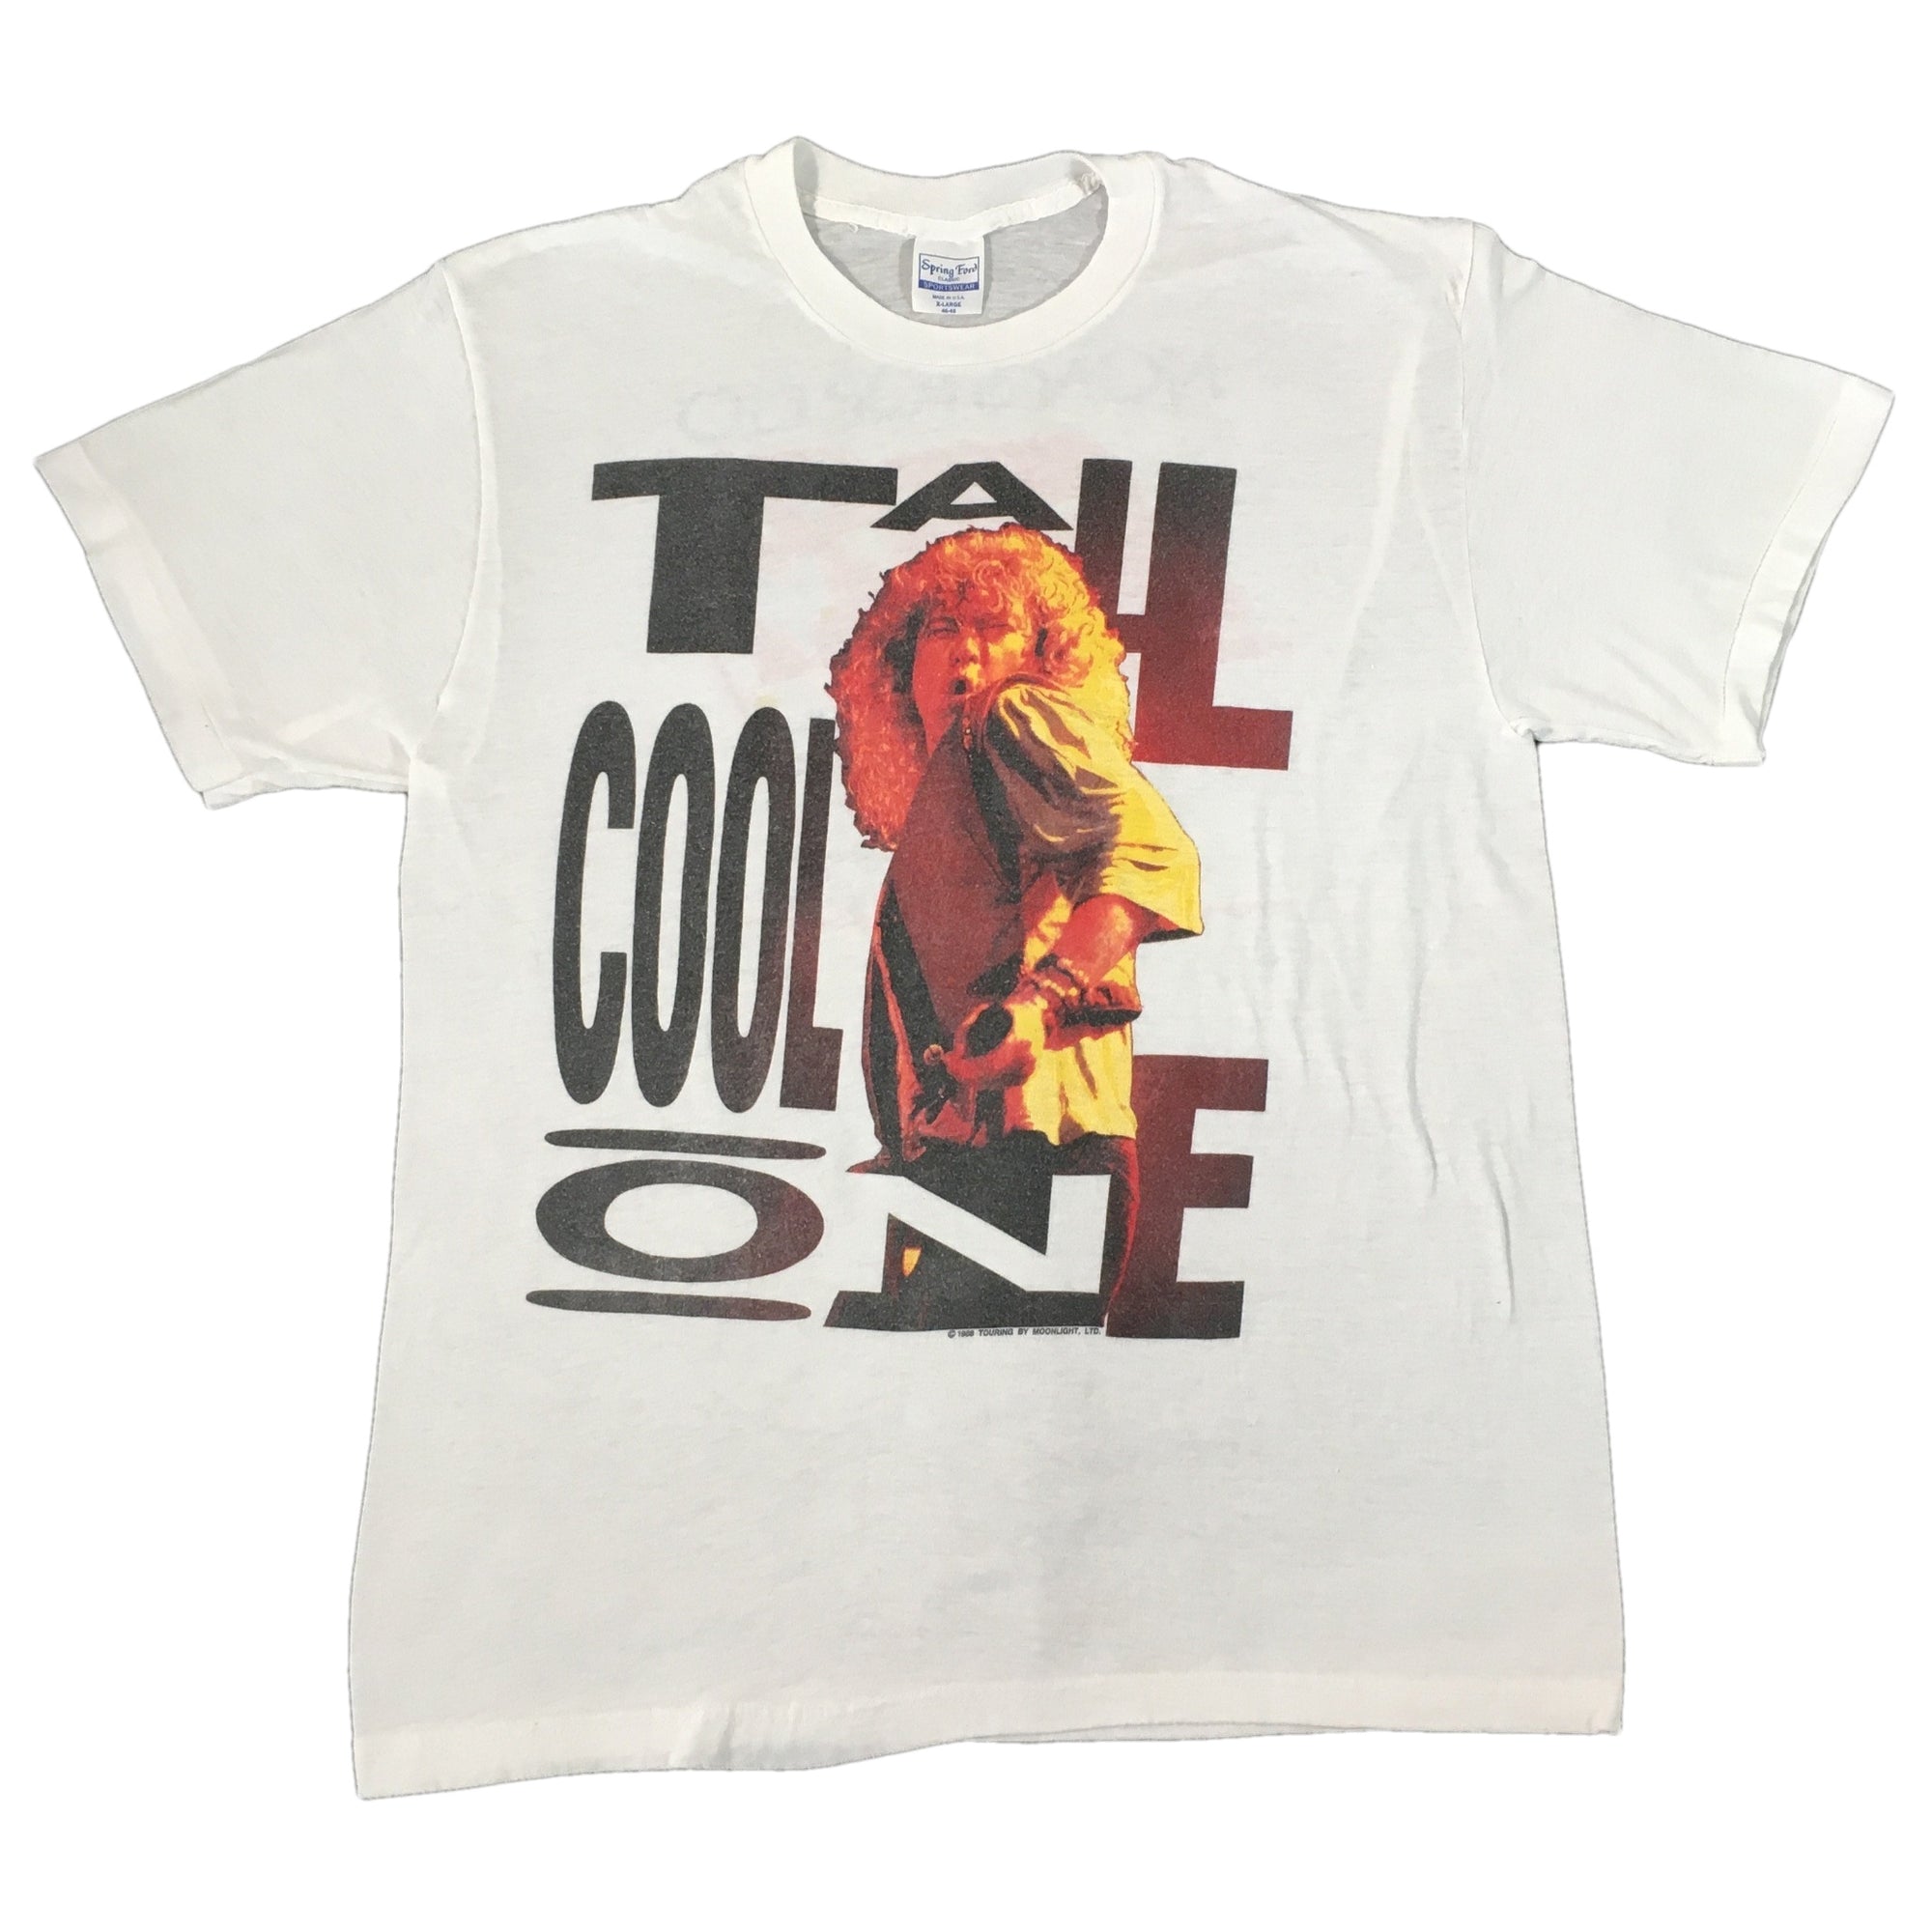 Vintage Robert Plant "Tall Cool One" T-Shirt - jointcustodydc